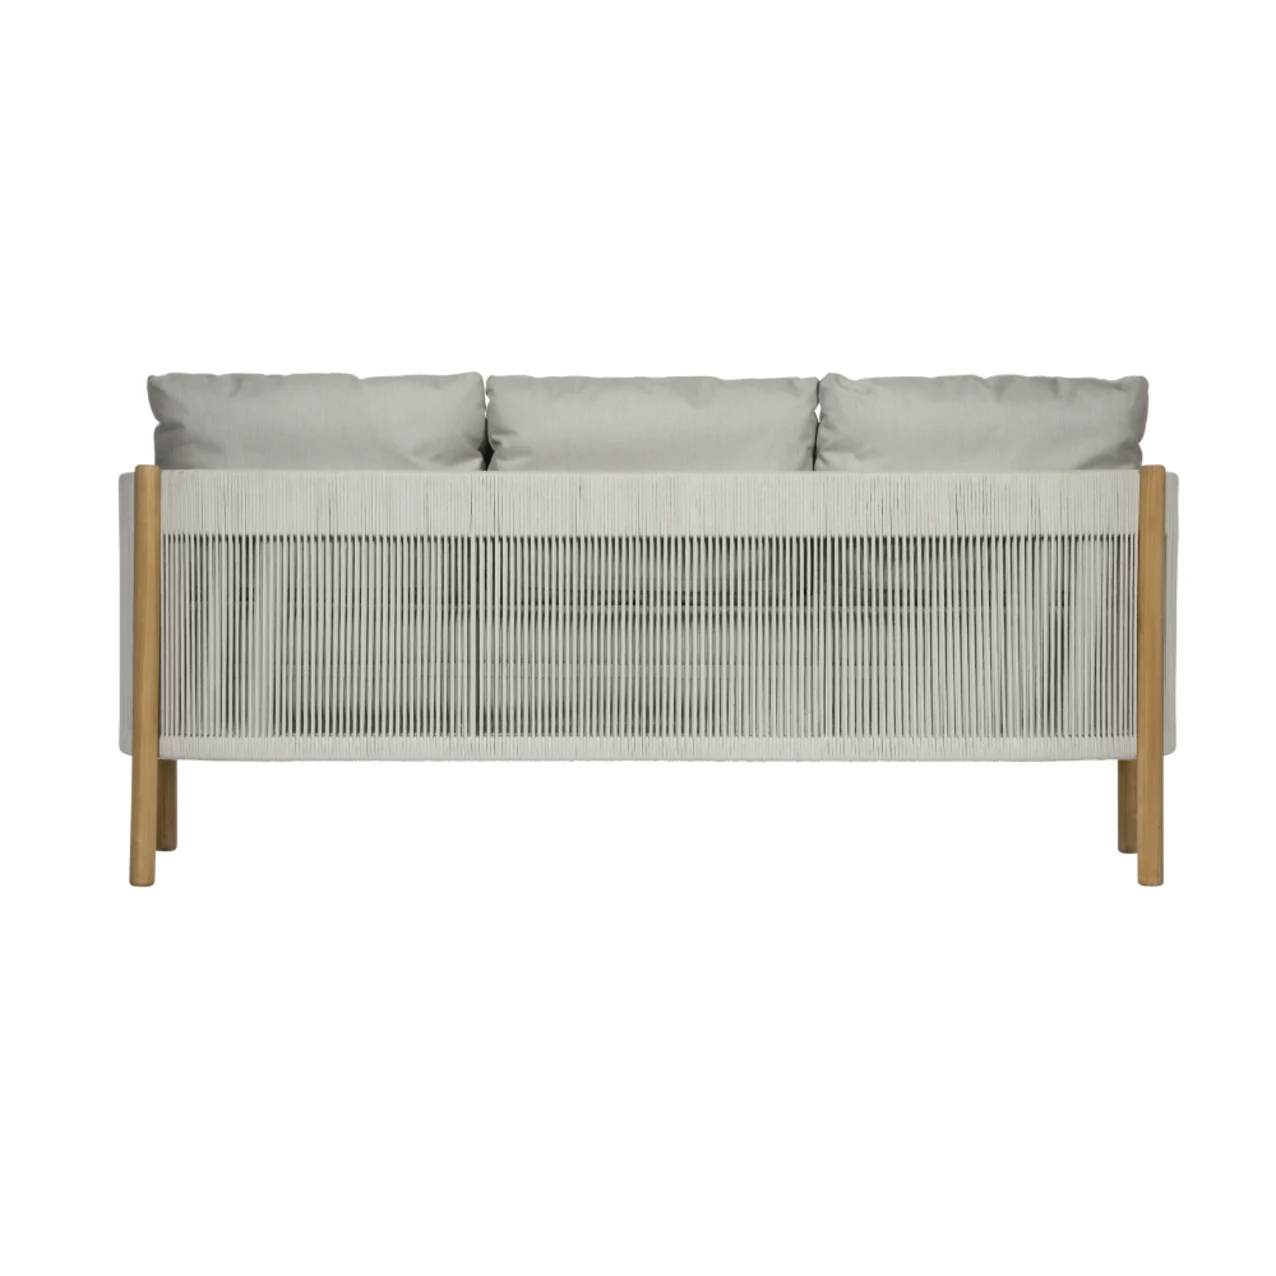 Barlow Tyrie Cocoon Teak Sofa | Frame: Powder-coated Aluminum with Olefin Cord, Chalk | Seat & Back Cushions: Sunbrella®, Lead Chine